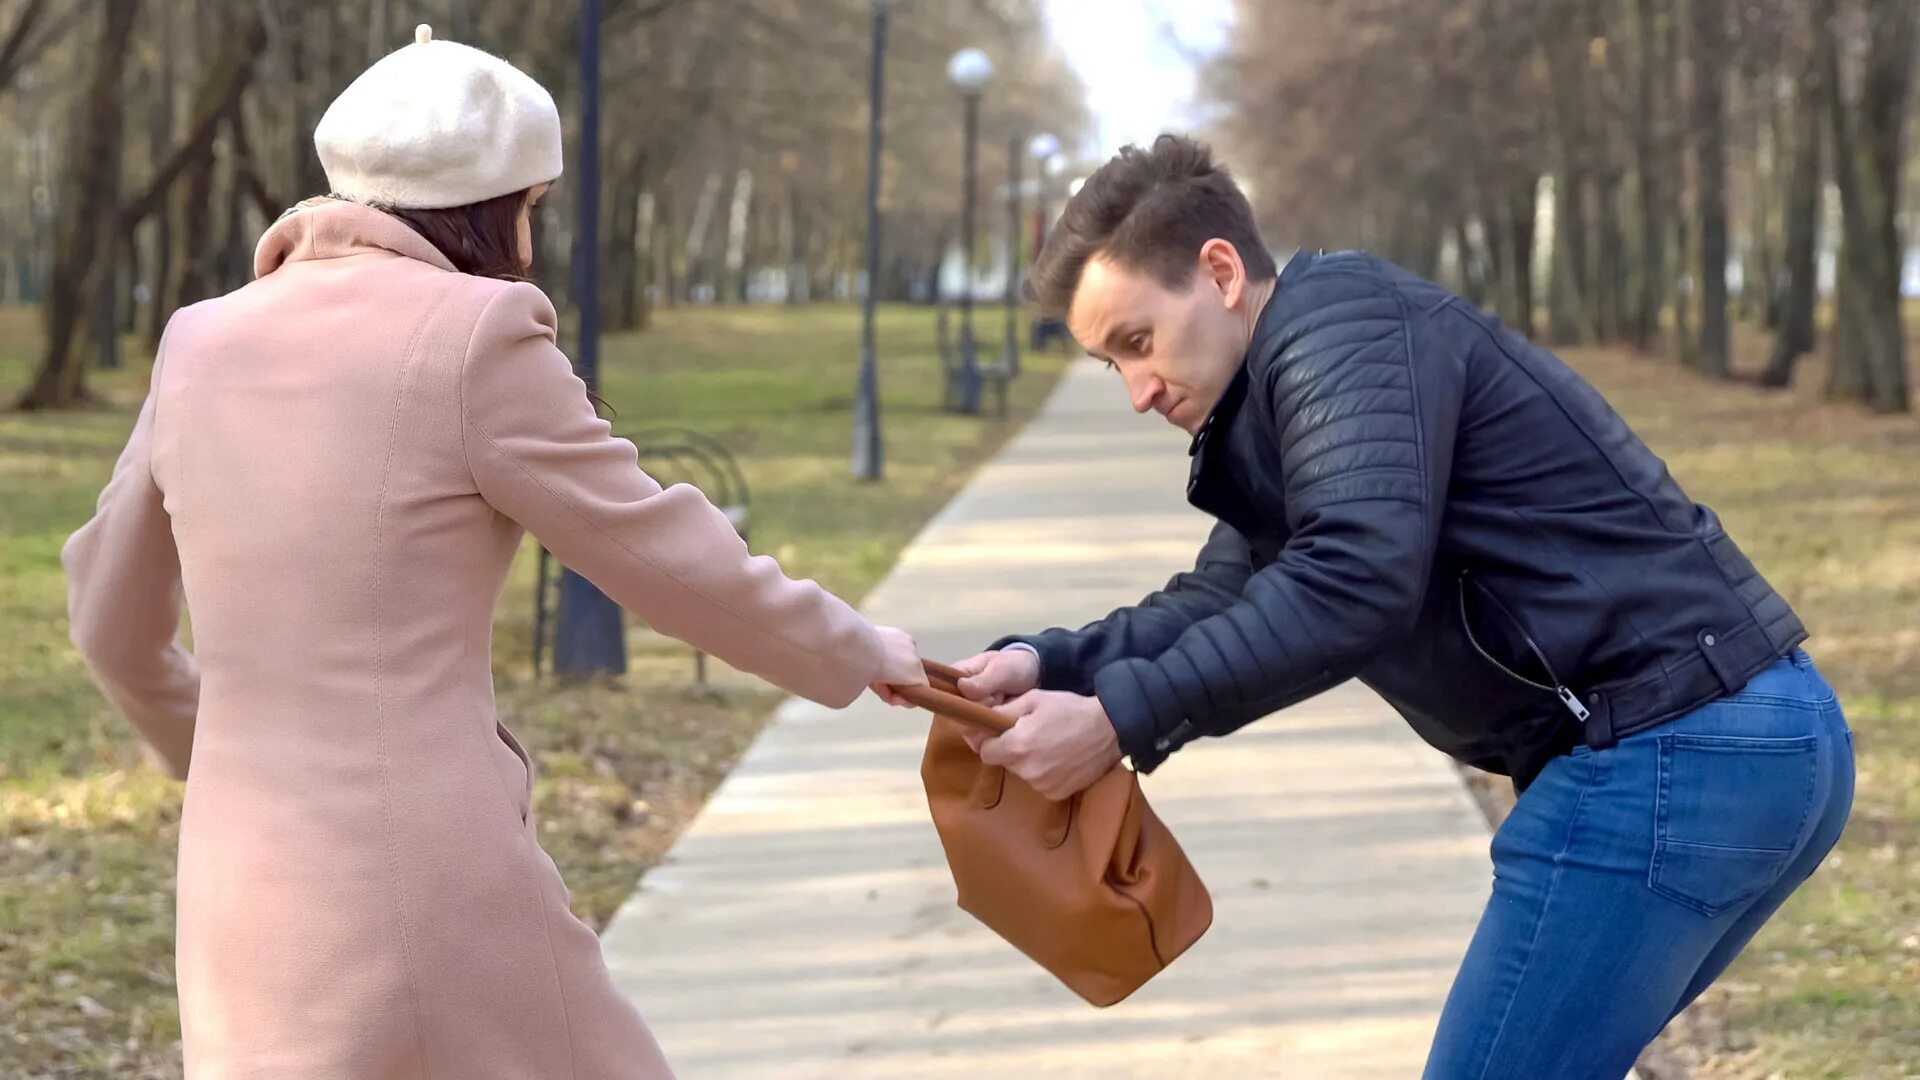 Украду п. Человек ворует сумку. Женщина ворует сумочку. Девушка крадет сумку.